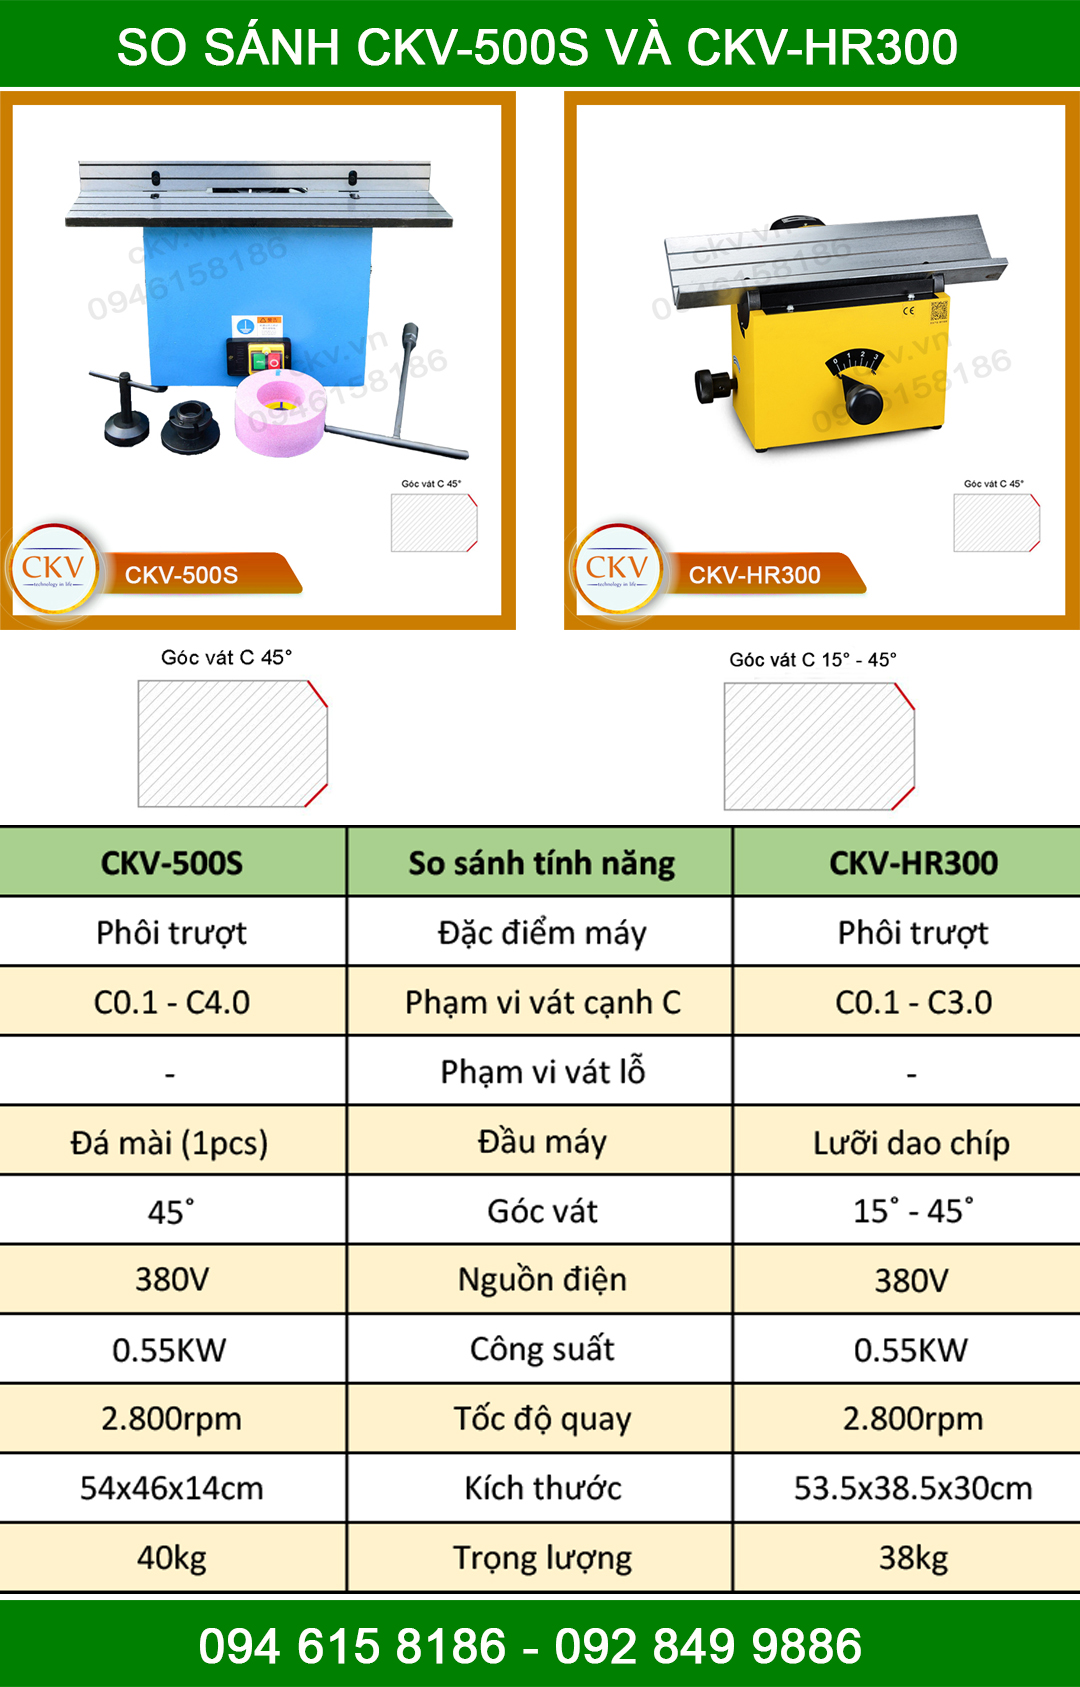 So sánh CKV-500S với CKV-HR300